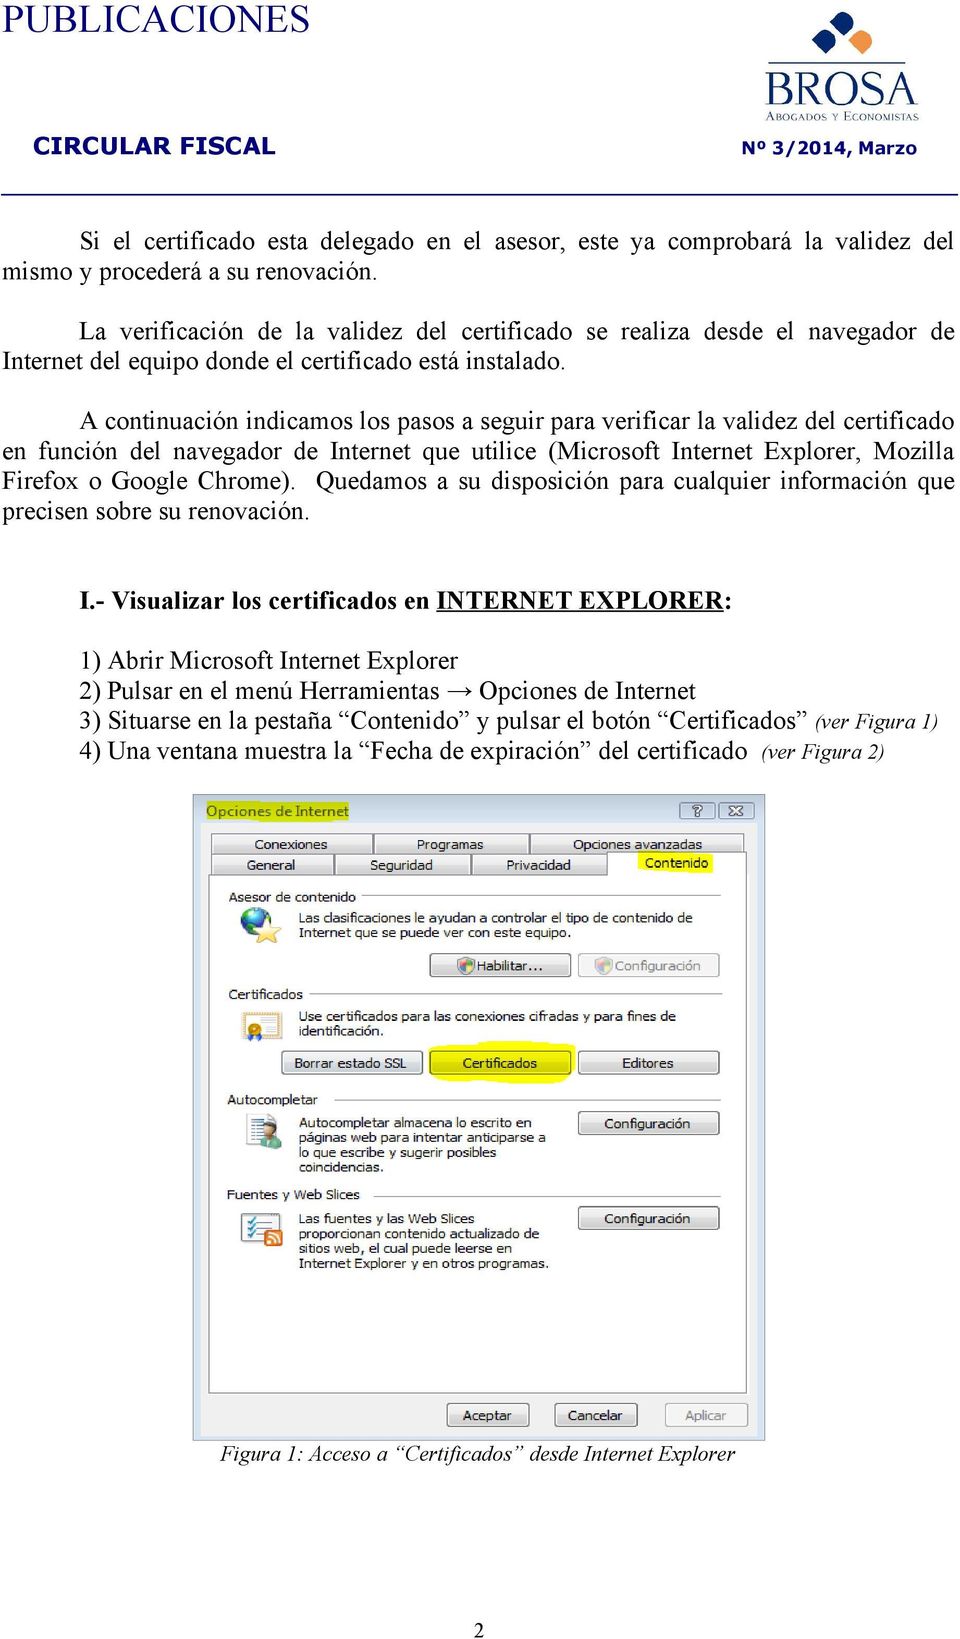 A continuación indicamos los pasos a seguir para verificar la validez del certificado en función del navegador de Internet que utilice (Microsoft Internet Explorer, Mozilla Firefox o Google Chrome).